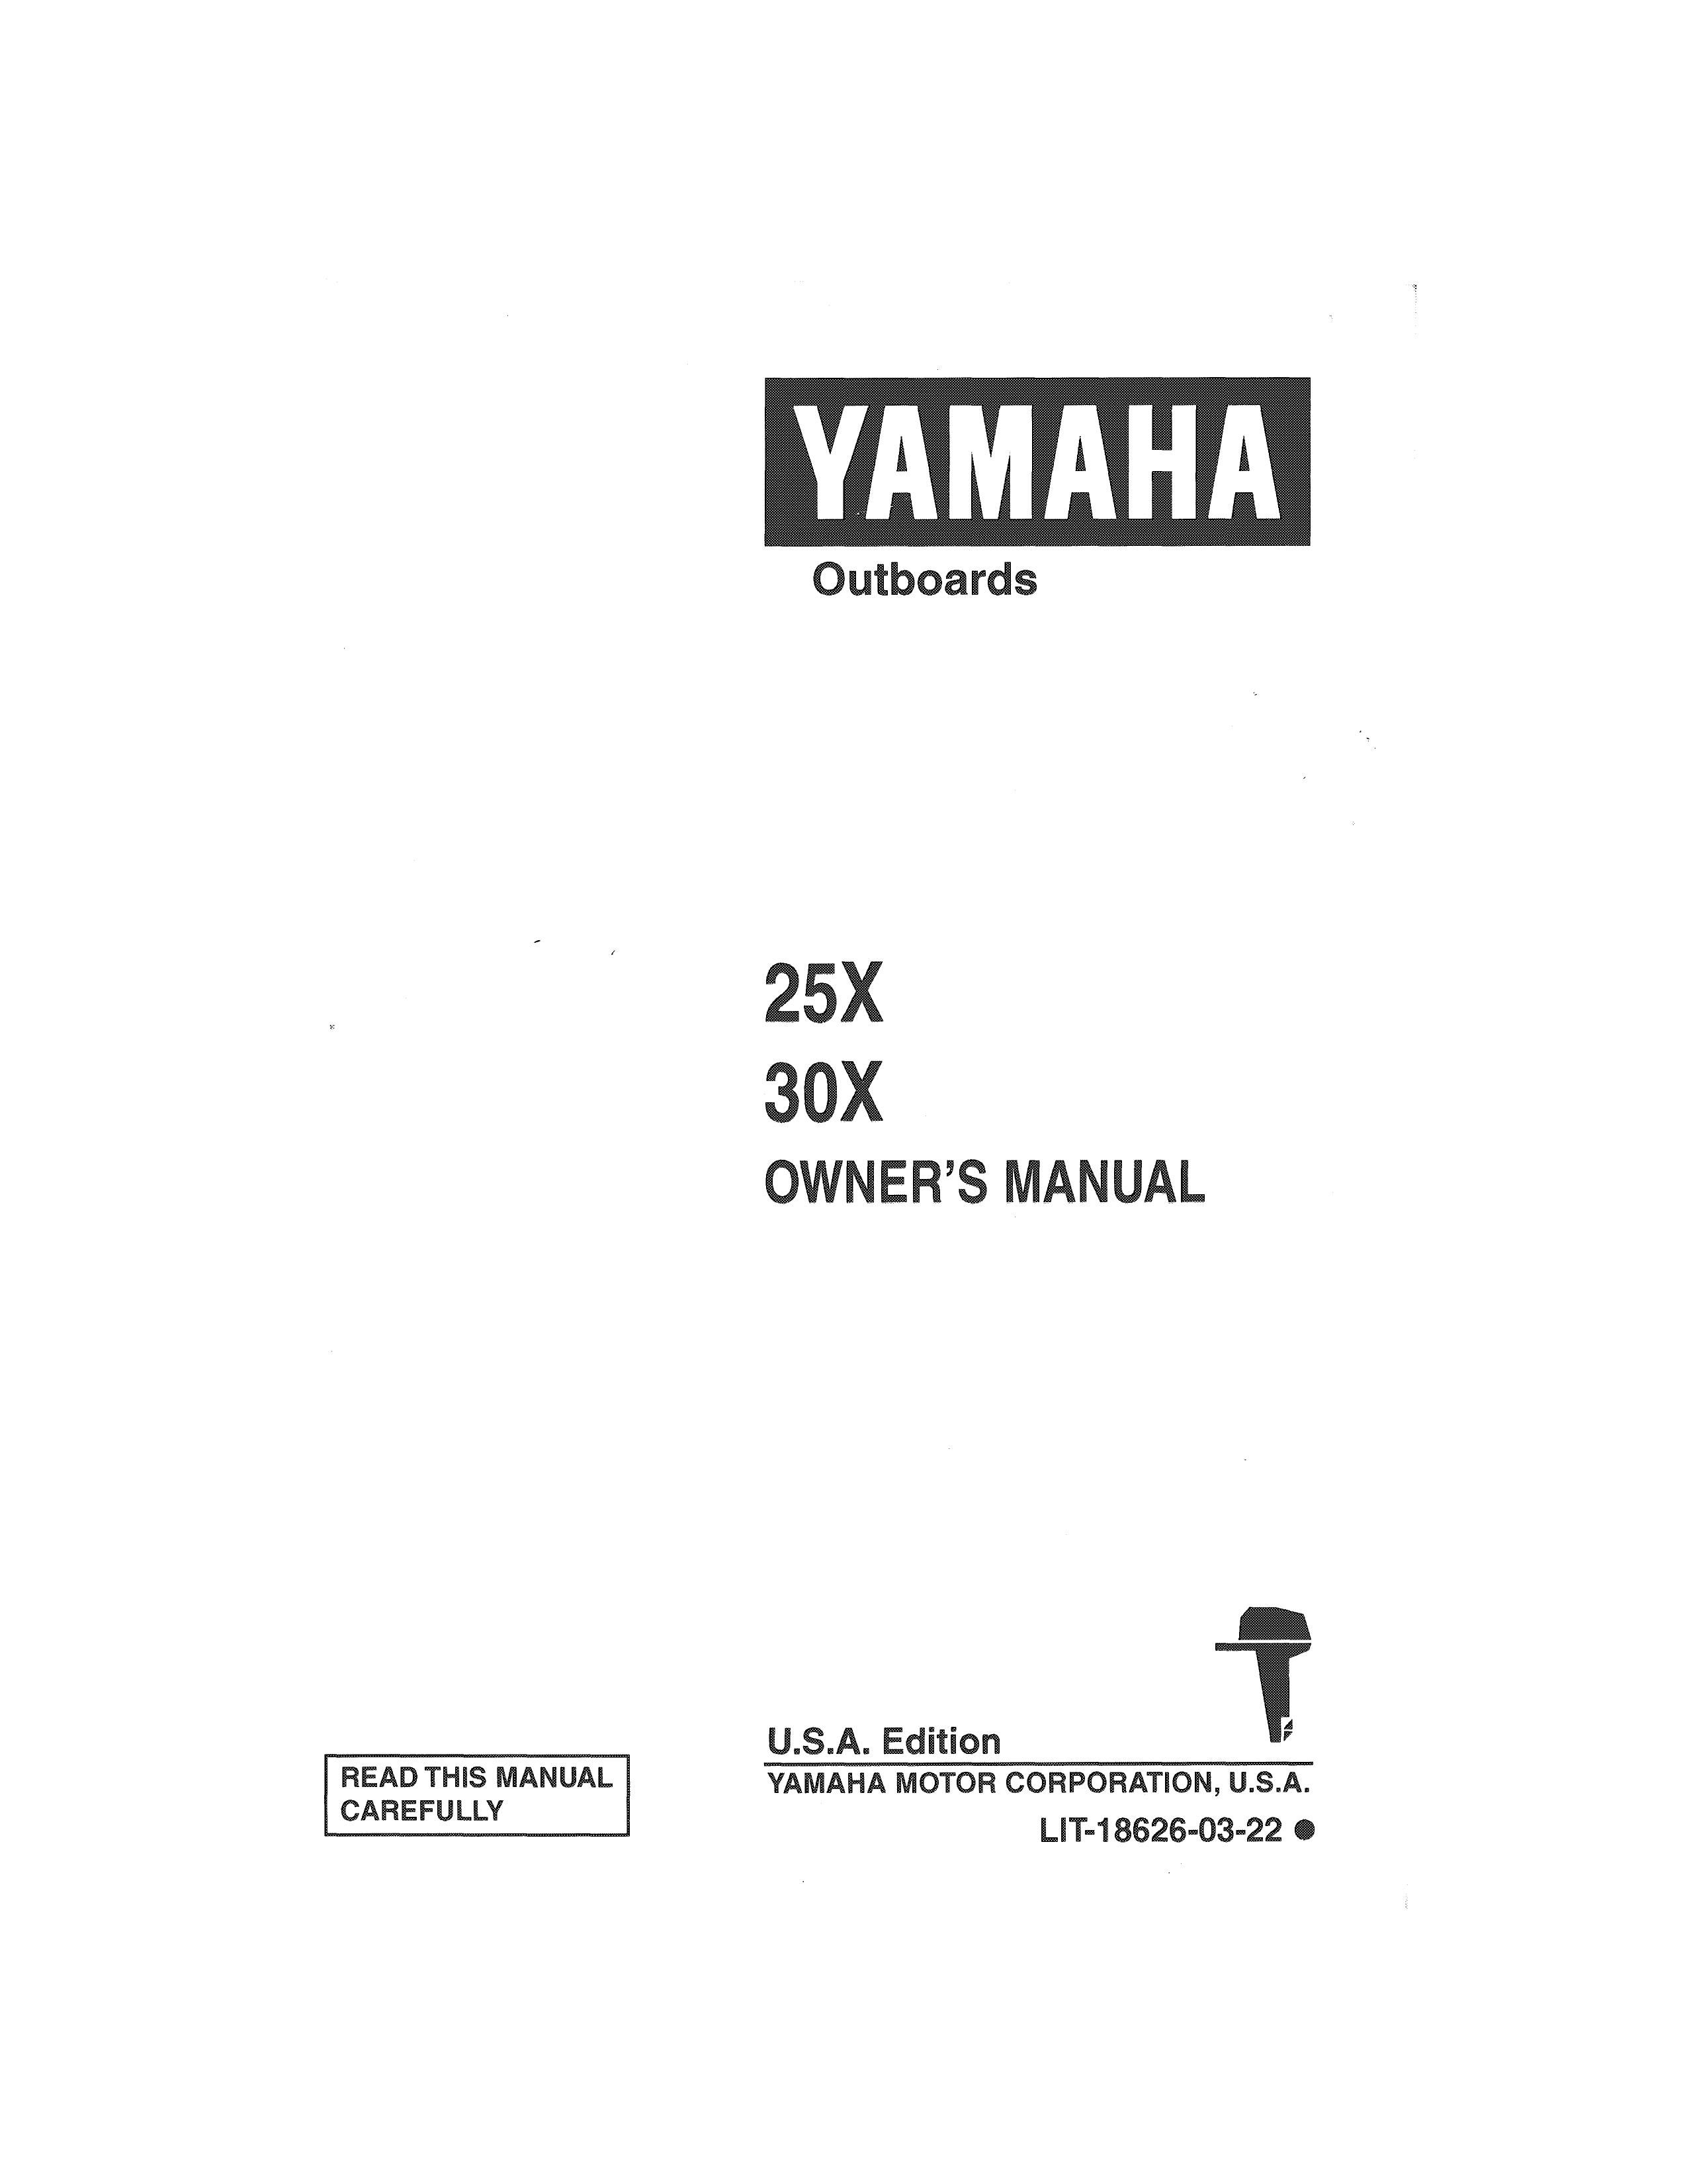 Yamaha 25X Outboard Motor User Manual